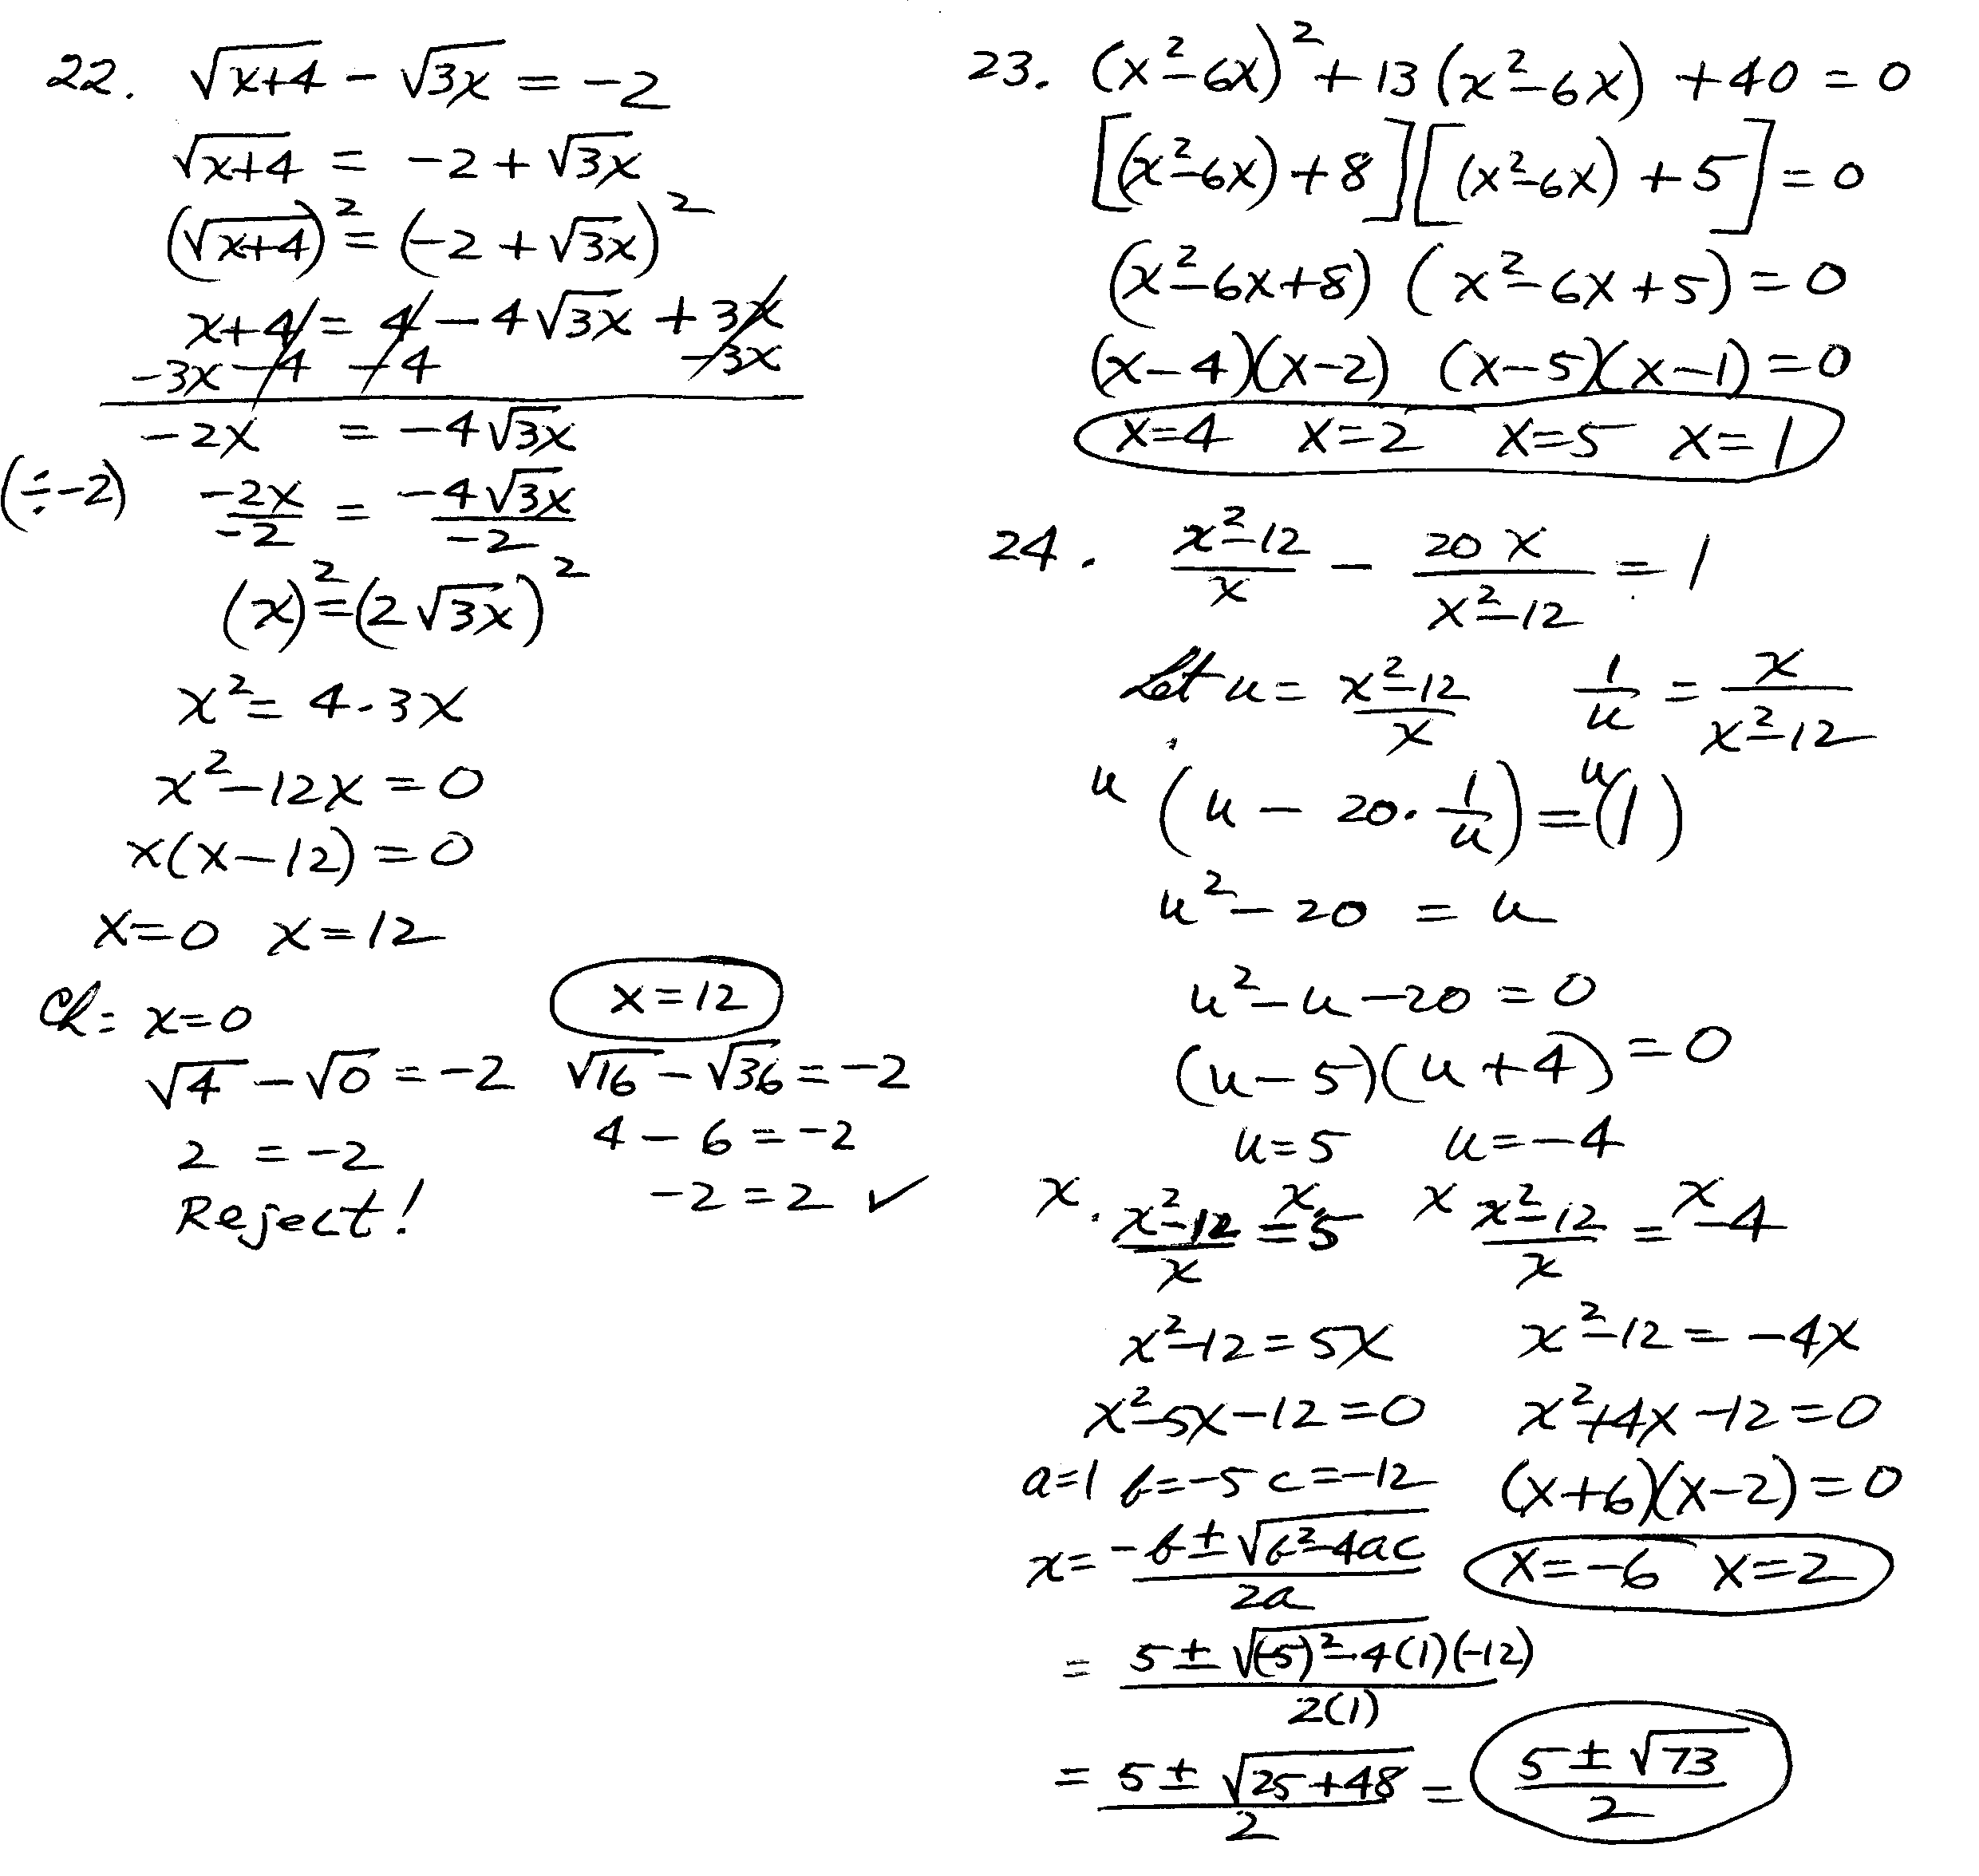 College algebra homework problems